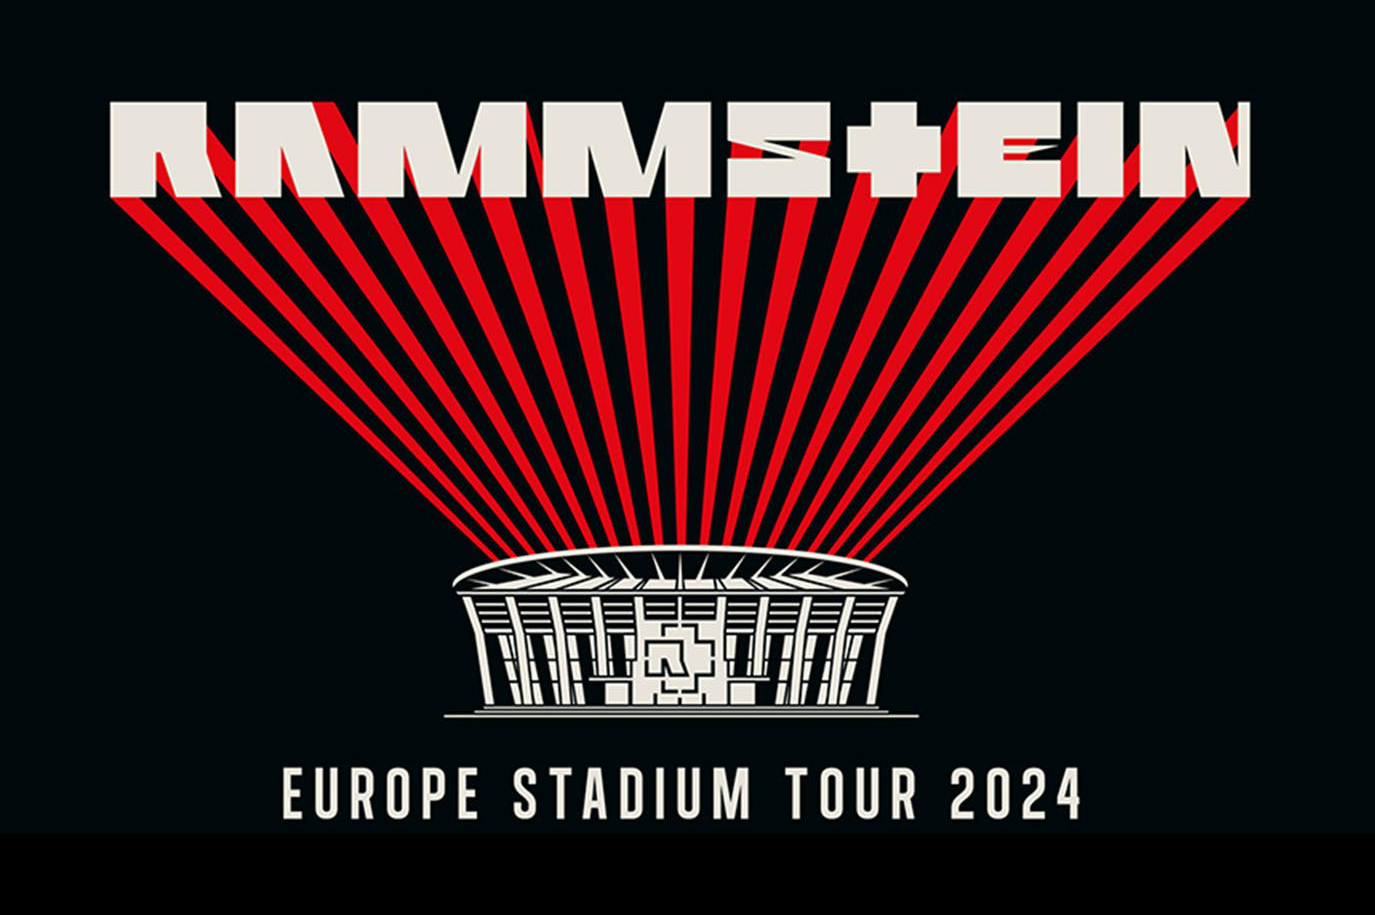 Rammstein World - All the information on the new Rammstein album